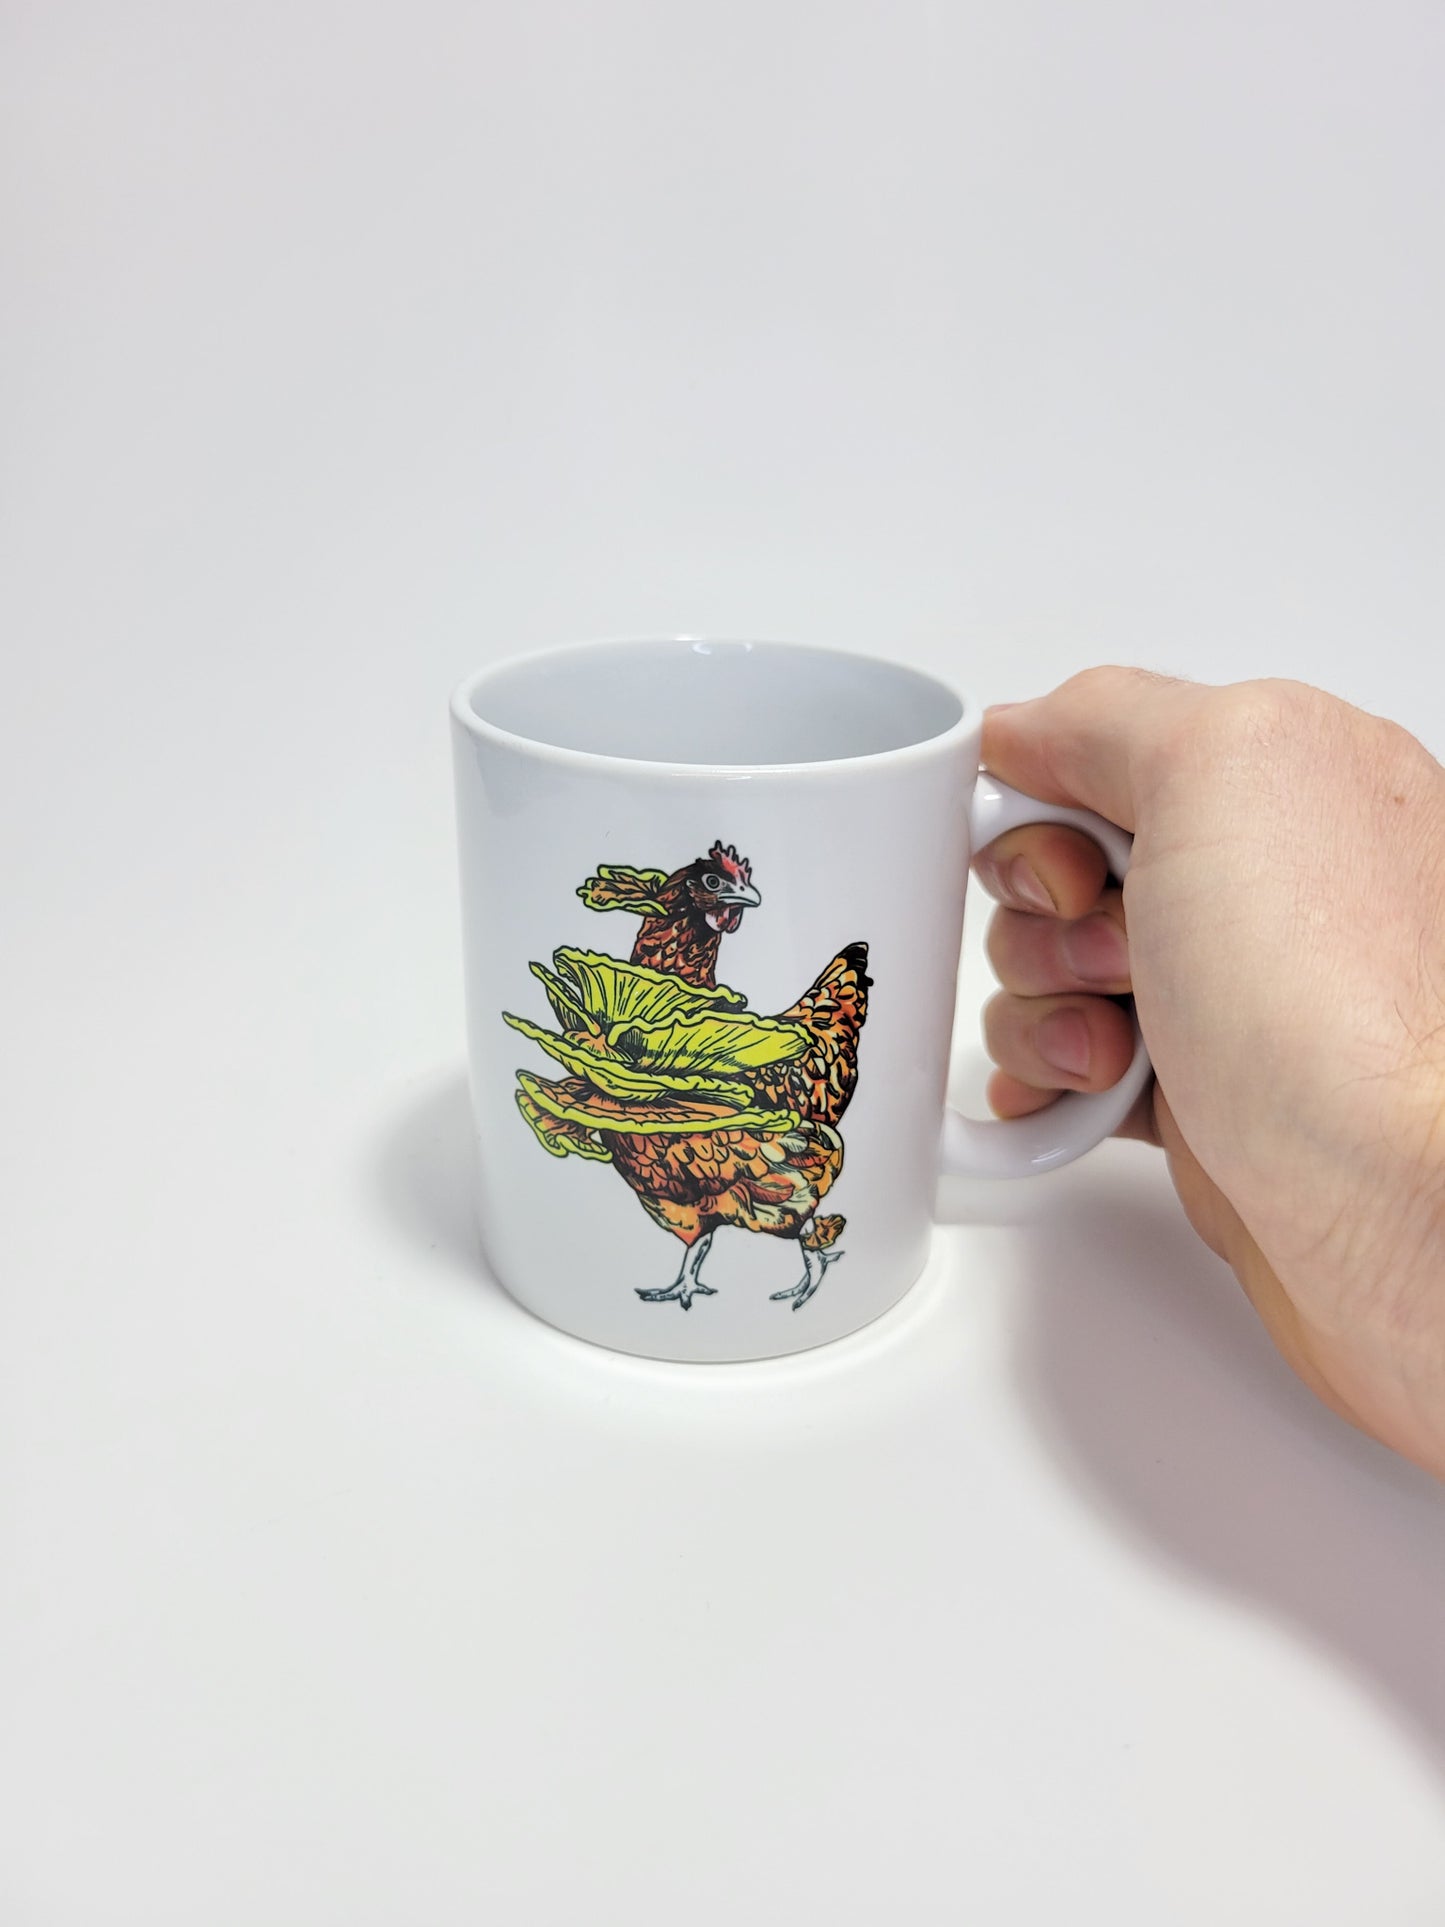 Chicken Of The Woods | Funny Mushroom Mug | Mushroom Artwork on Ceramic Cup | 11oz/15oz Sizes